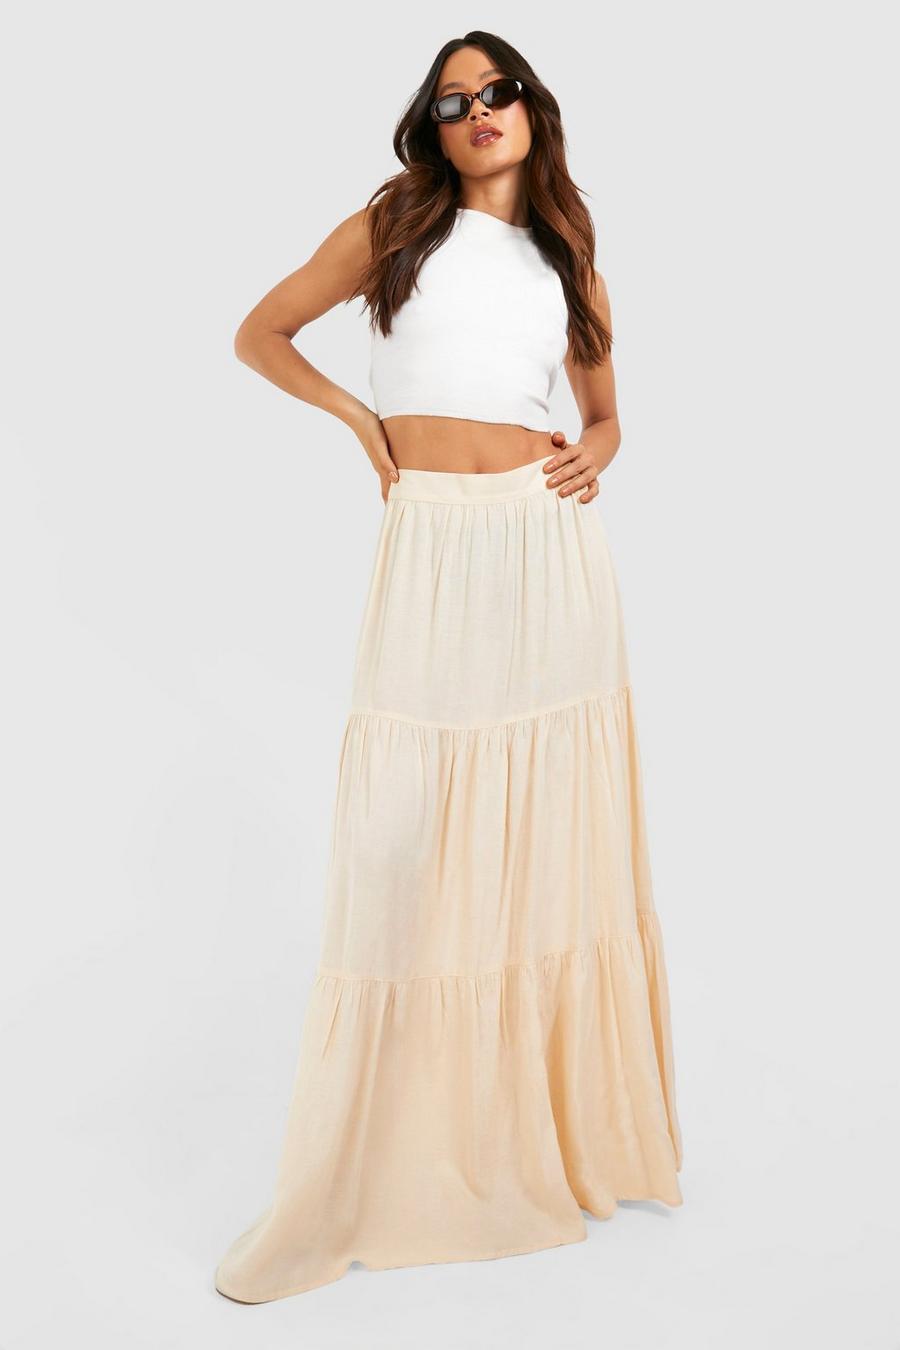 42 Long Denim Skirt, Tall Mermaid Skirt, Flared tiered skirt, Denim Skirts  Knee Length, Islamic Skirts, dress skirts, alsharifa.com